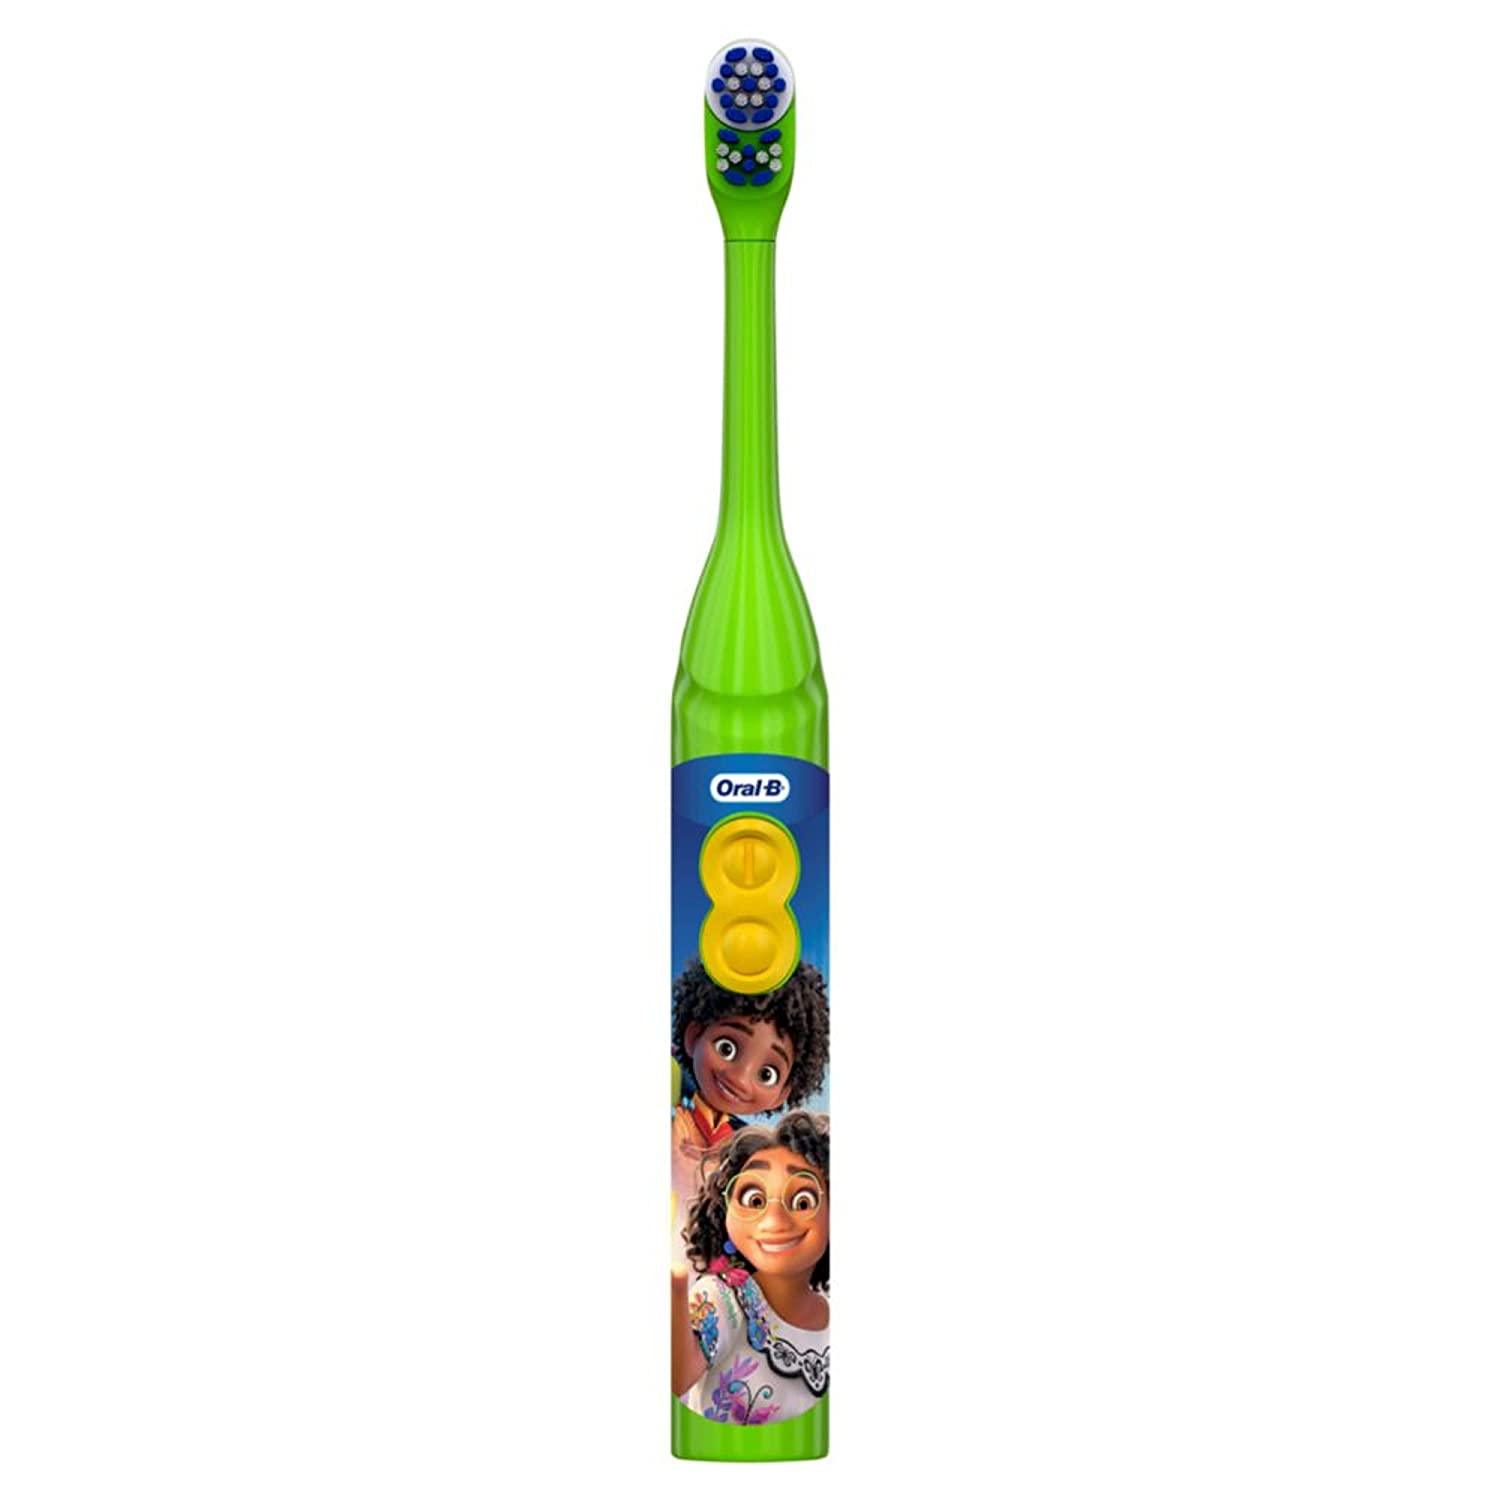 Oral-B Kid's Battery Toothbrush Featuring Disney's Encanto, Soft Bristles